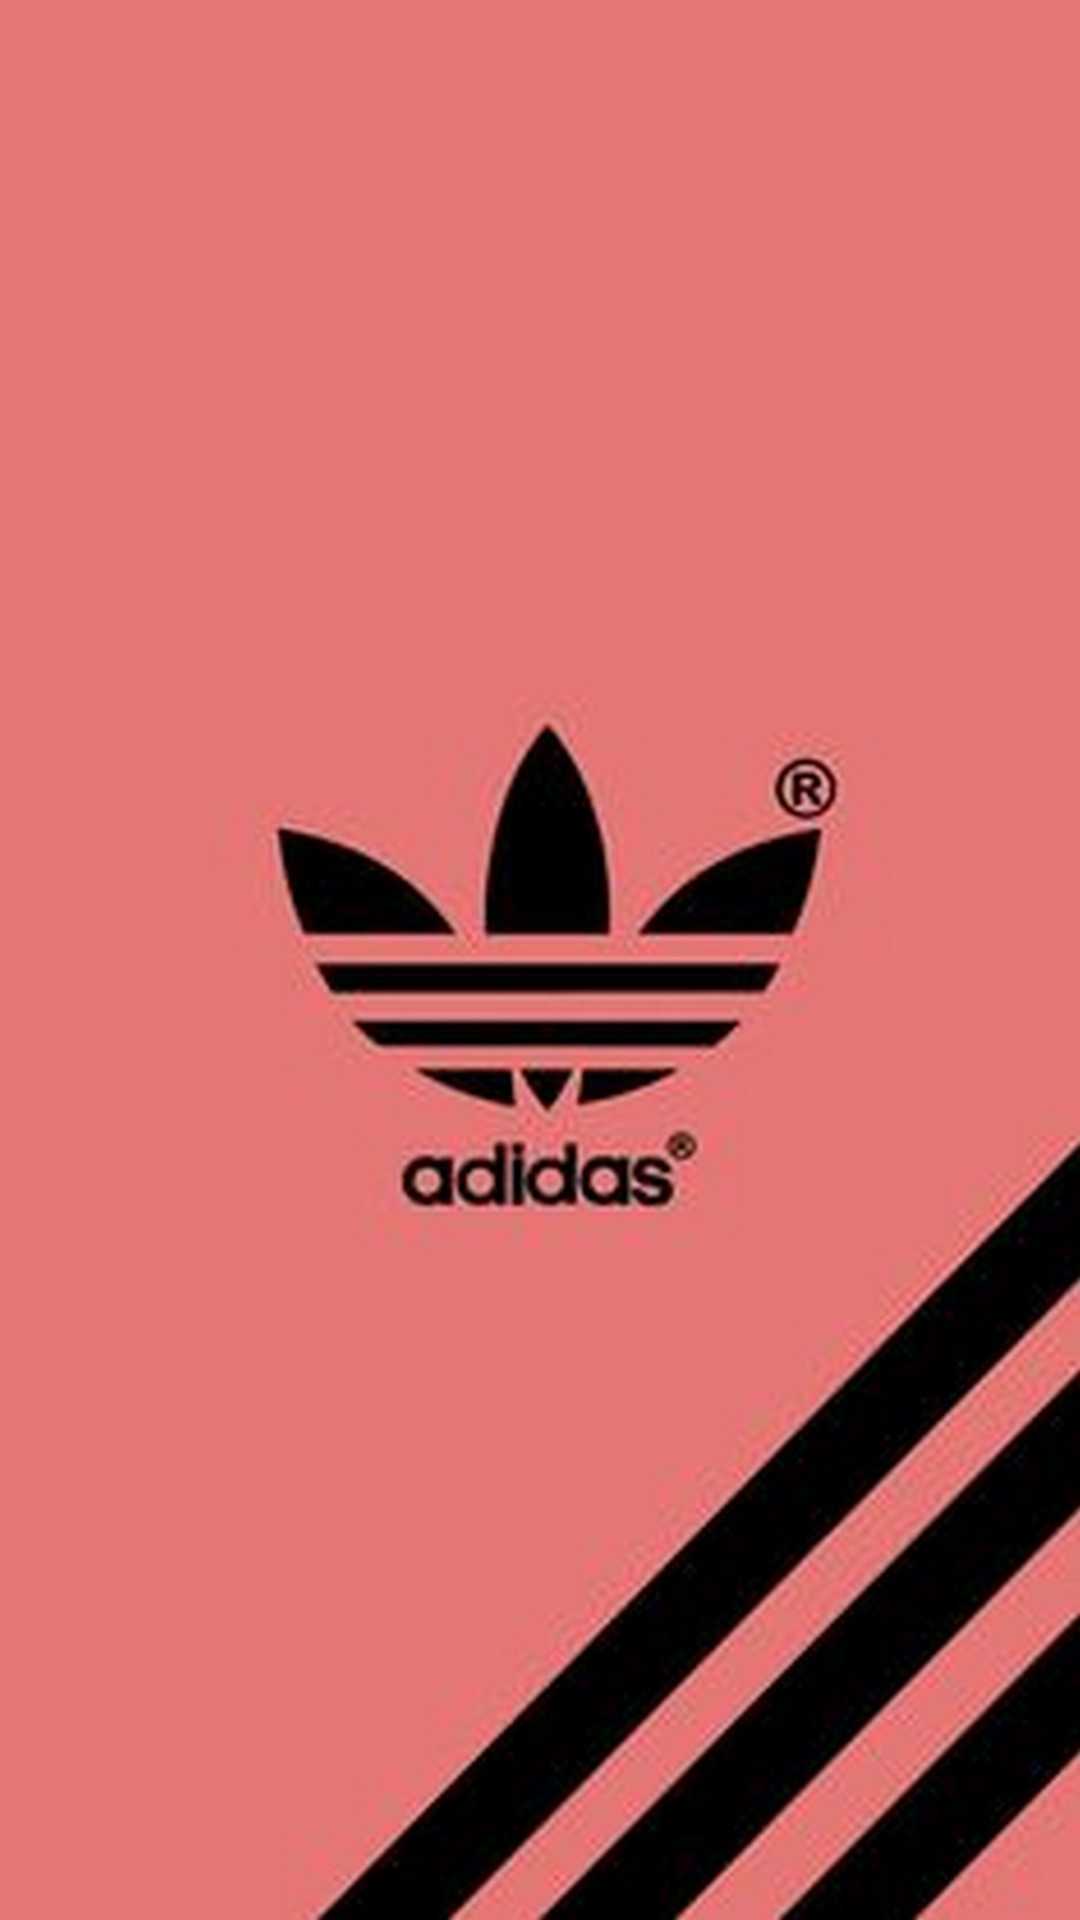 Free download adidas logo wallpaper Adidas logo wallpapers Adidas  [640x1136] for your Desktop, Mobile & Tablet | Explore 38+ Adidas Phone  Wallpapers | Adidas 2015 Wallpaper, Adidas Wallpapers, Adidas Wallpaper